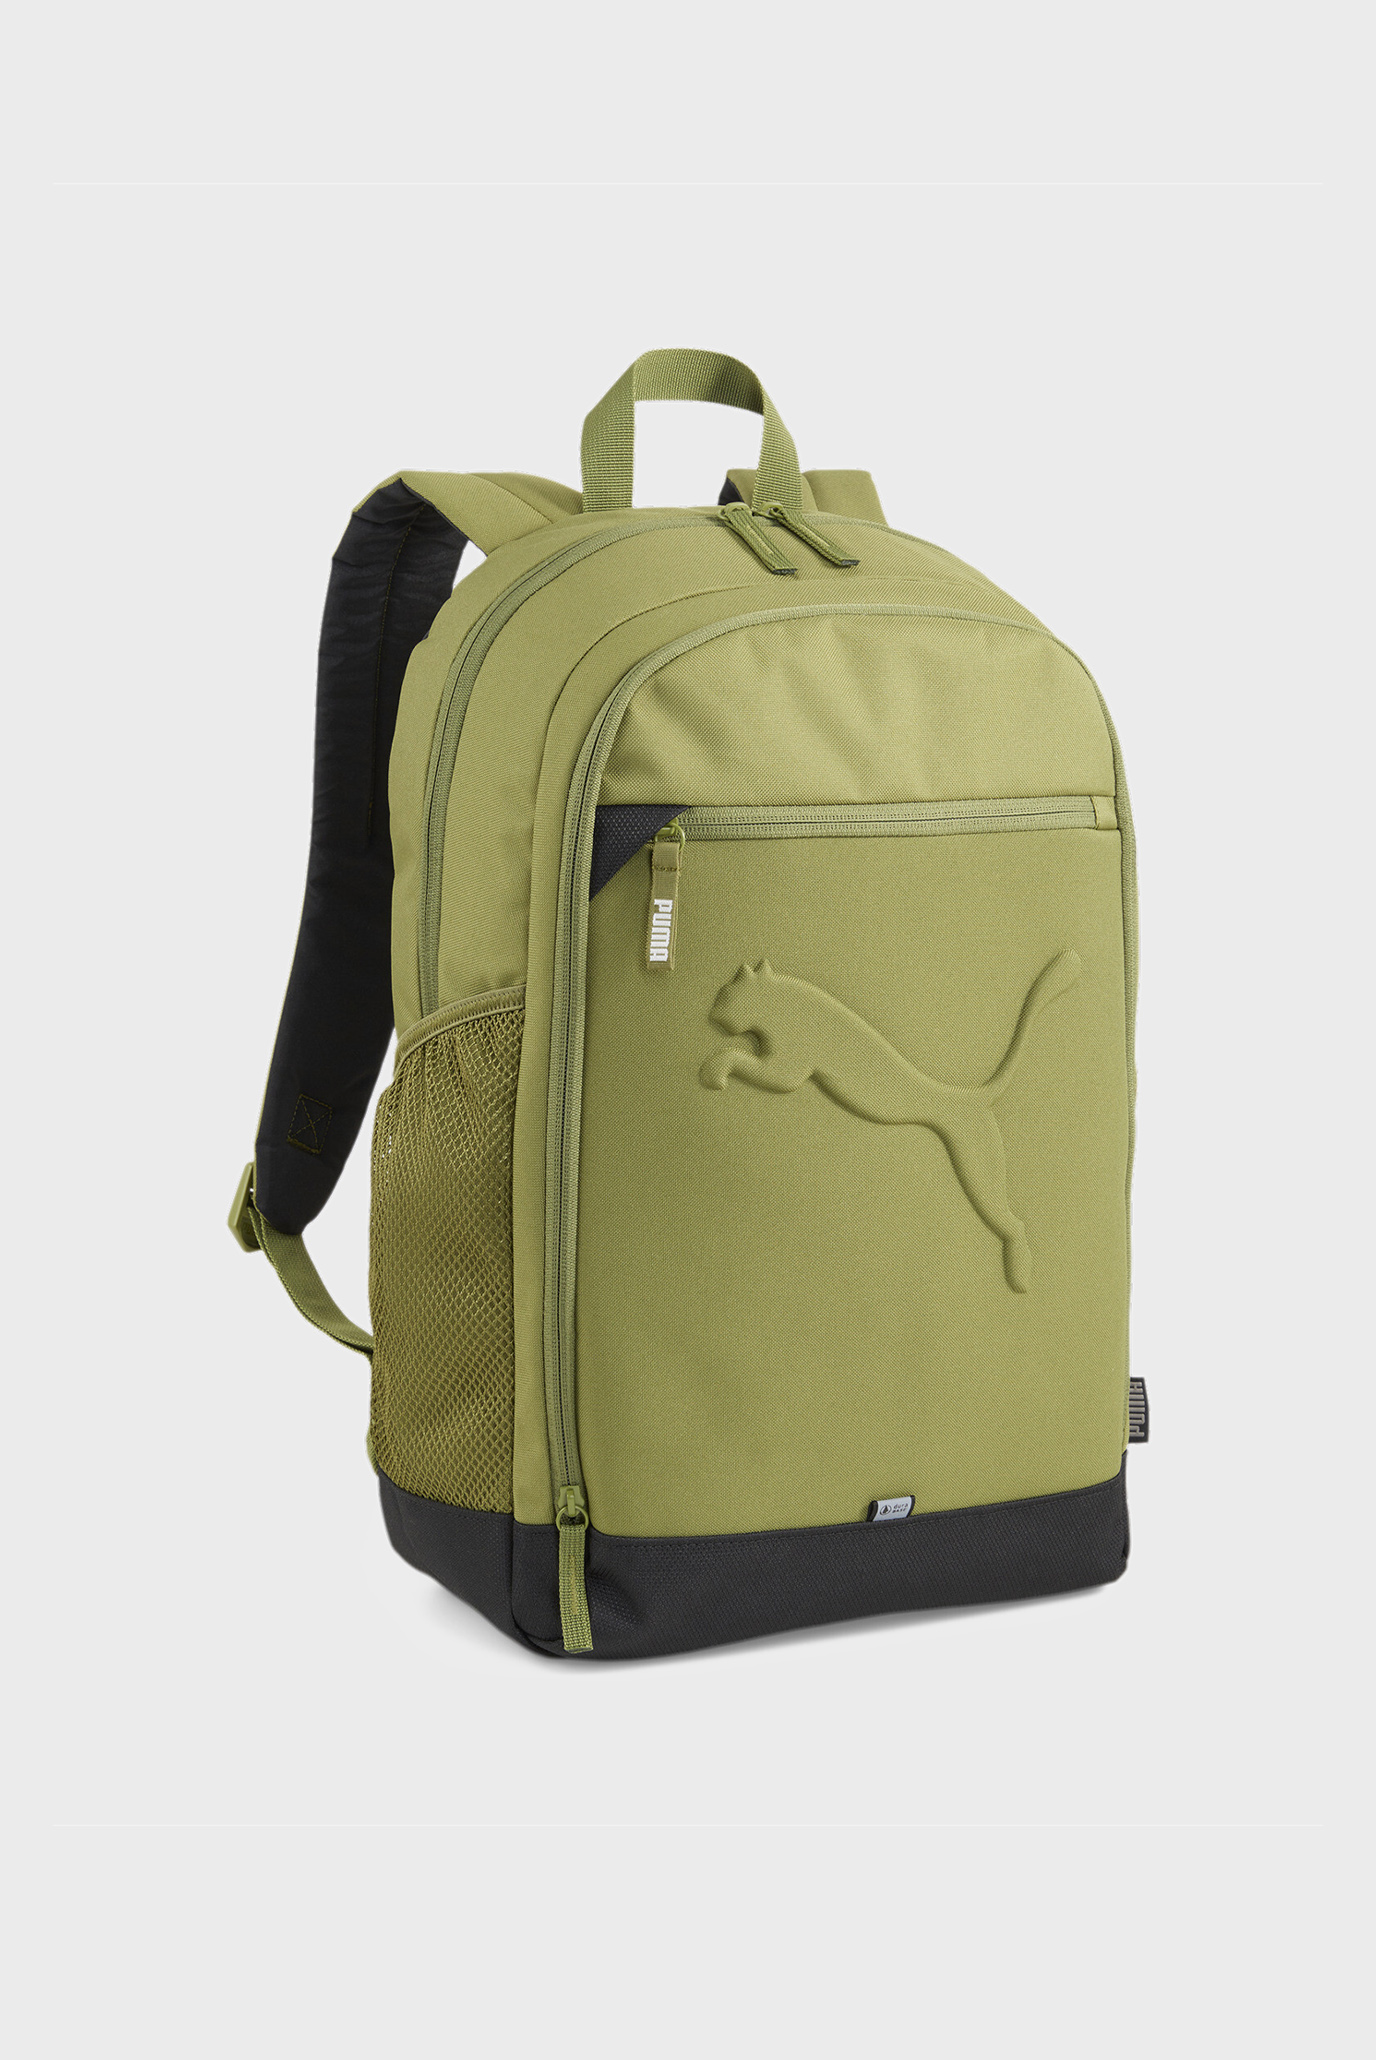 Зеленый рюкзак Buzz Backpack 1